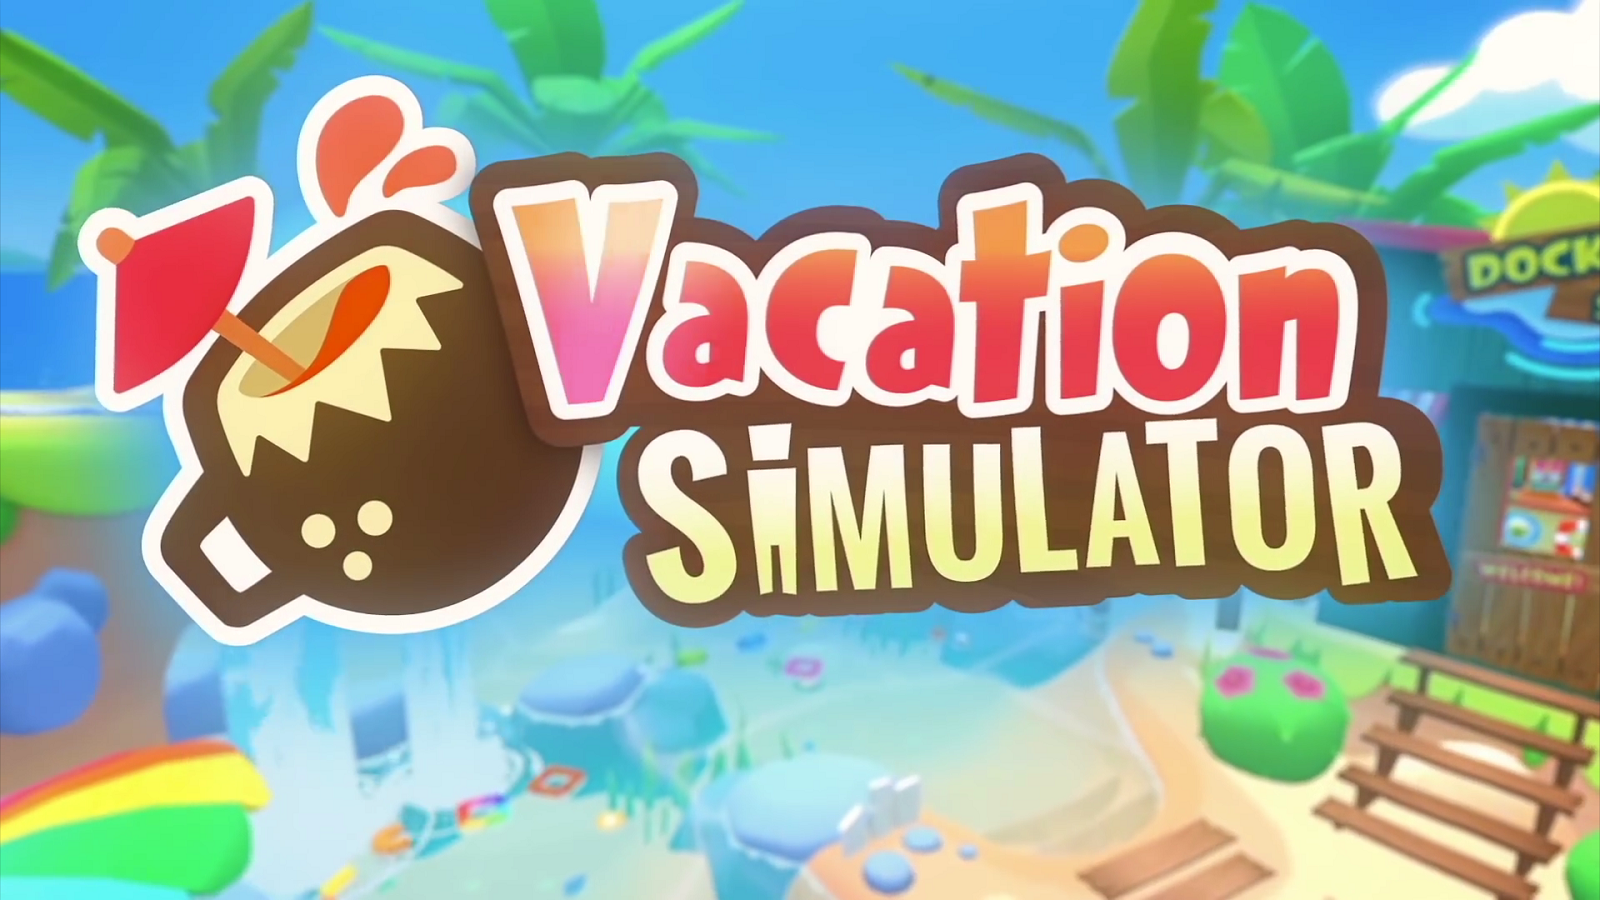 Vacation Simulator. Симулятор отдыха ВР. Job Simulator отпуск. Джоб симулятор VR.